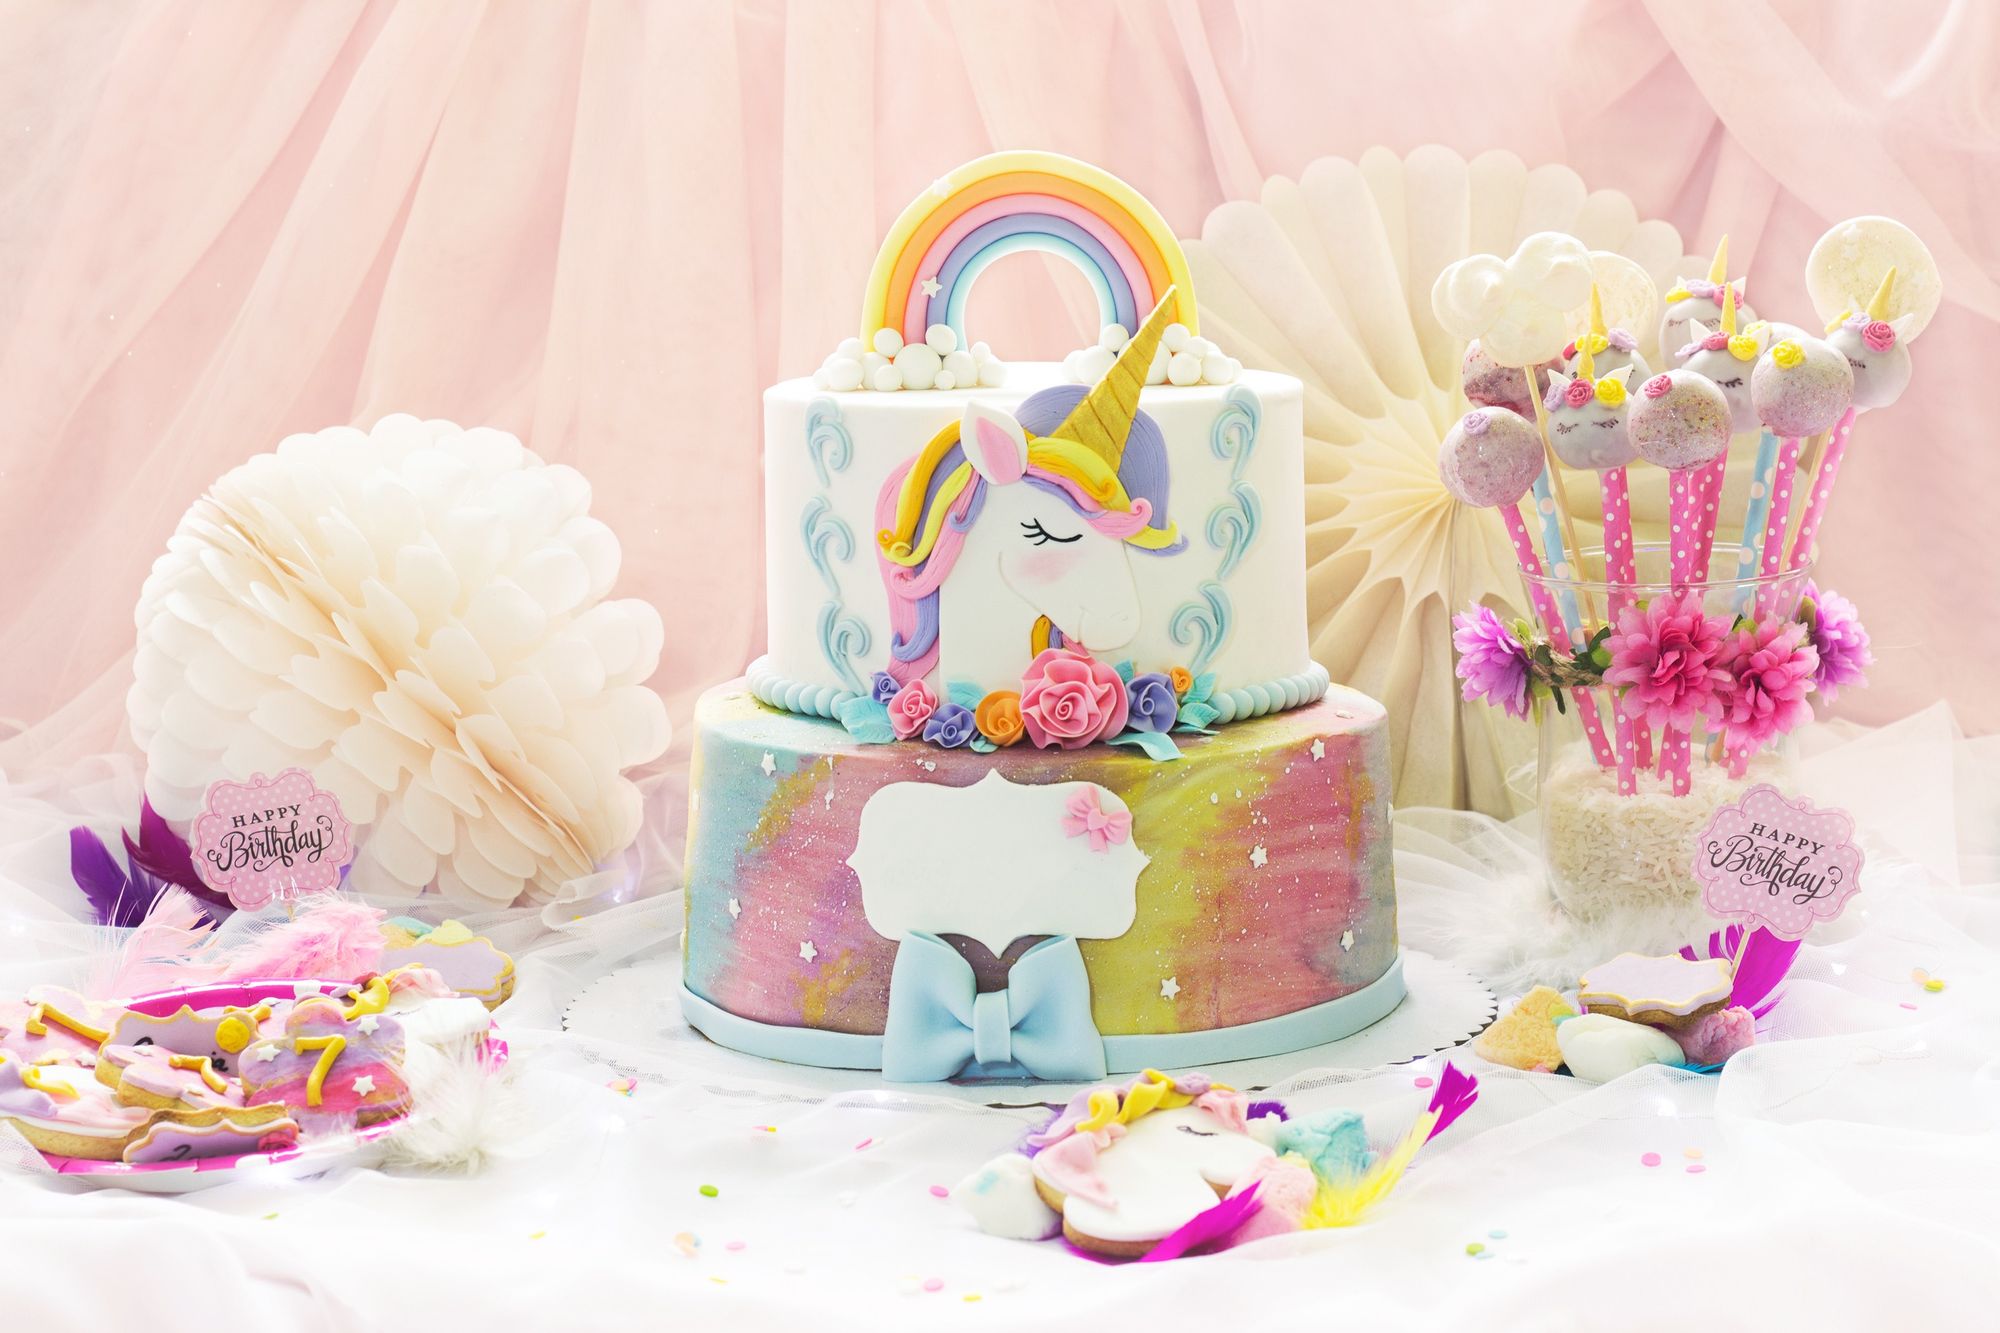 Iridescent Rainbow Unicorn Party Balloons Girls Birthday Decorations  Supplies